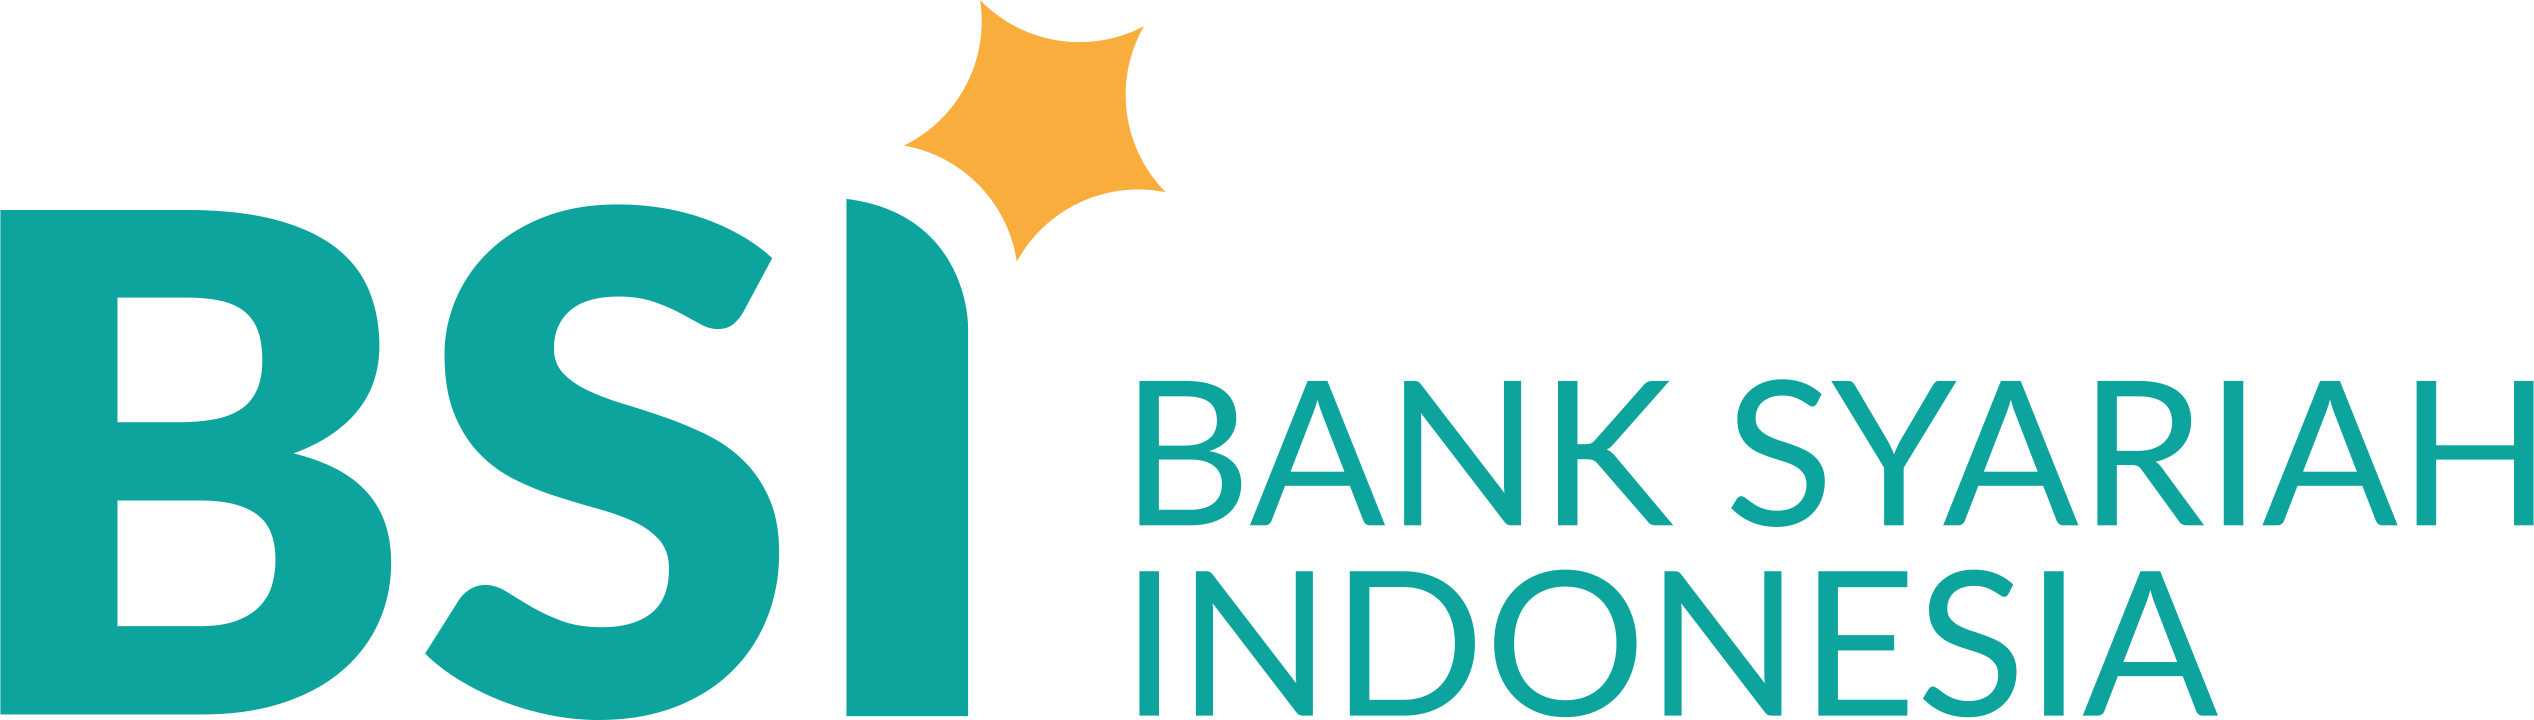 BSI-Bank-Syariah-Indonesia-Logo-PNG720p-Vector69Com-1.png